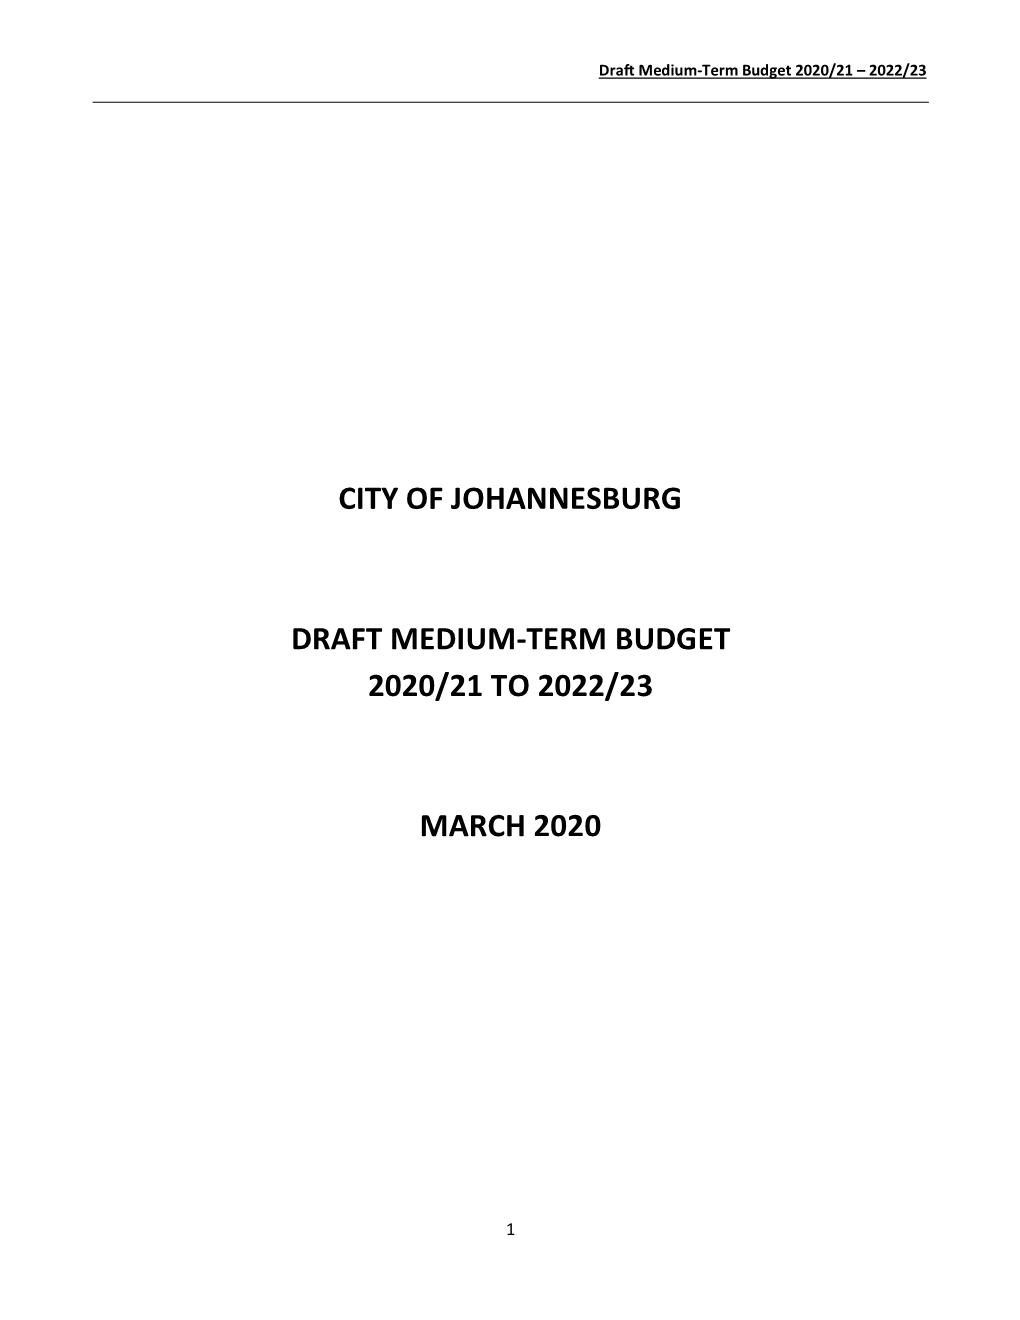 City of Johannesburg Draft Medium-Term Budget 2020/21 to 2022/23 March 2020